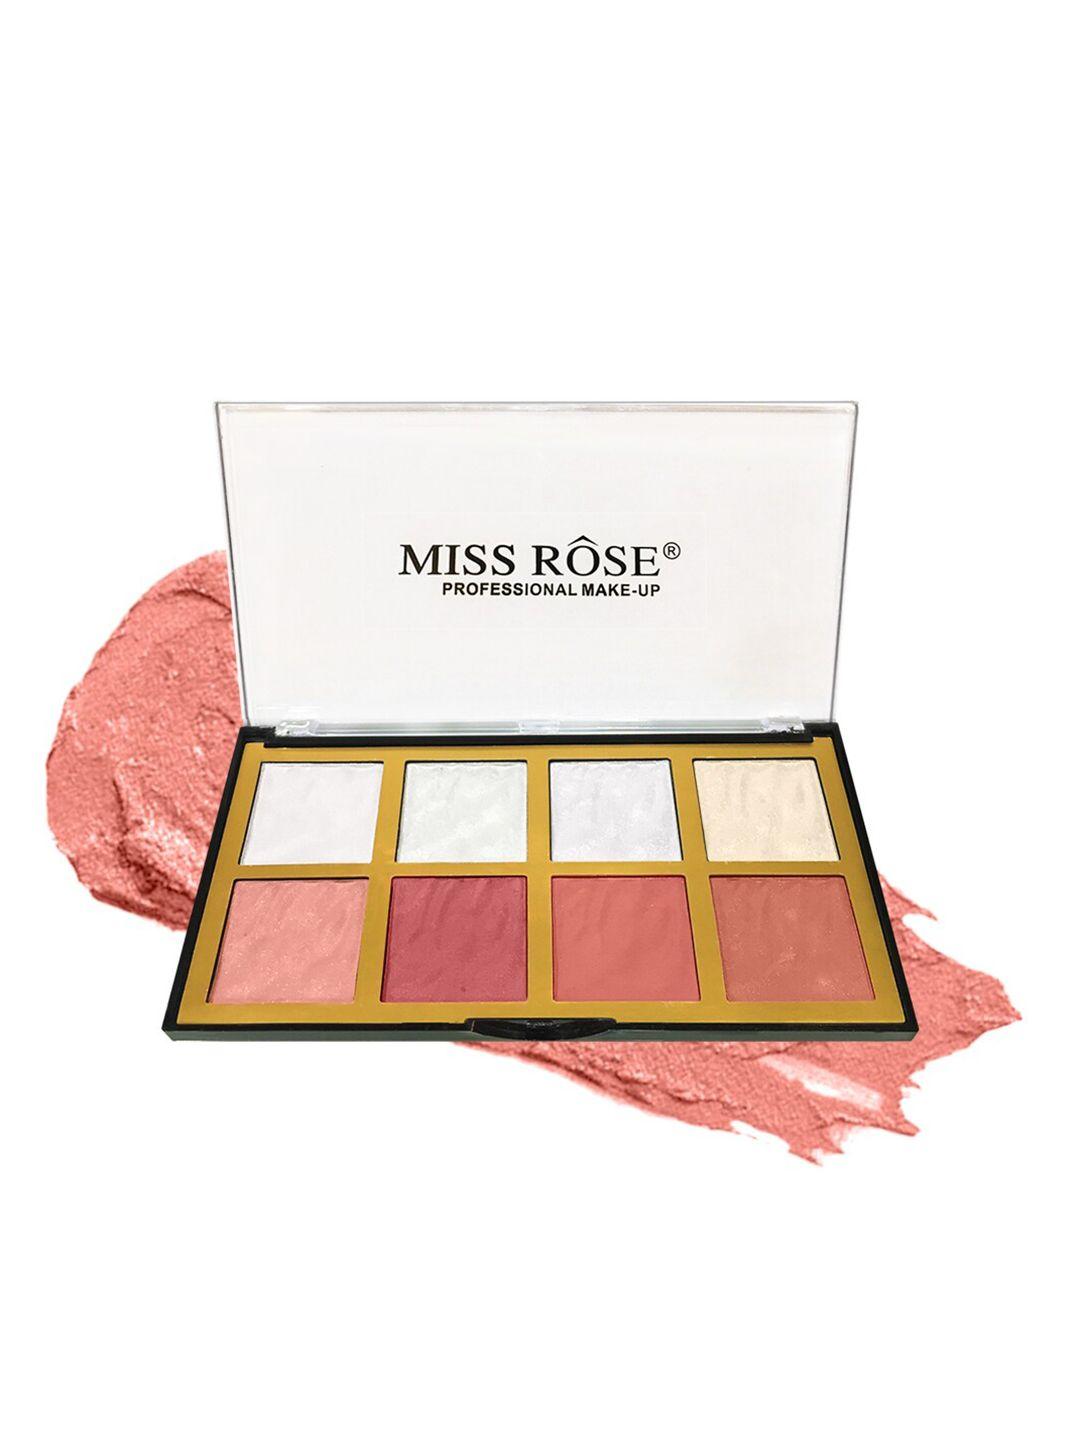 miss rose unisex professional highlighter & blusher palette 7003-216z2 01